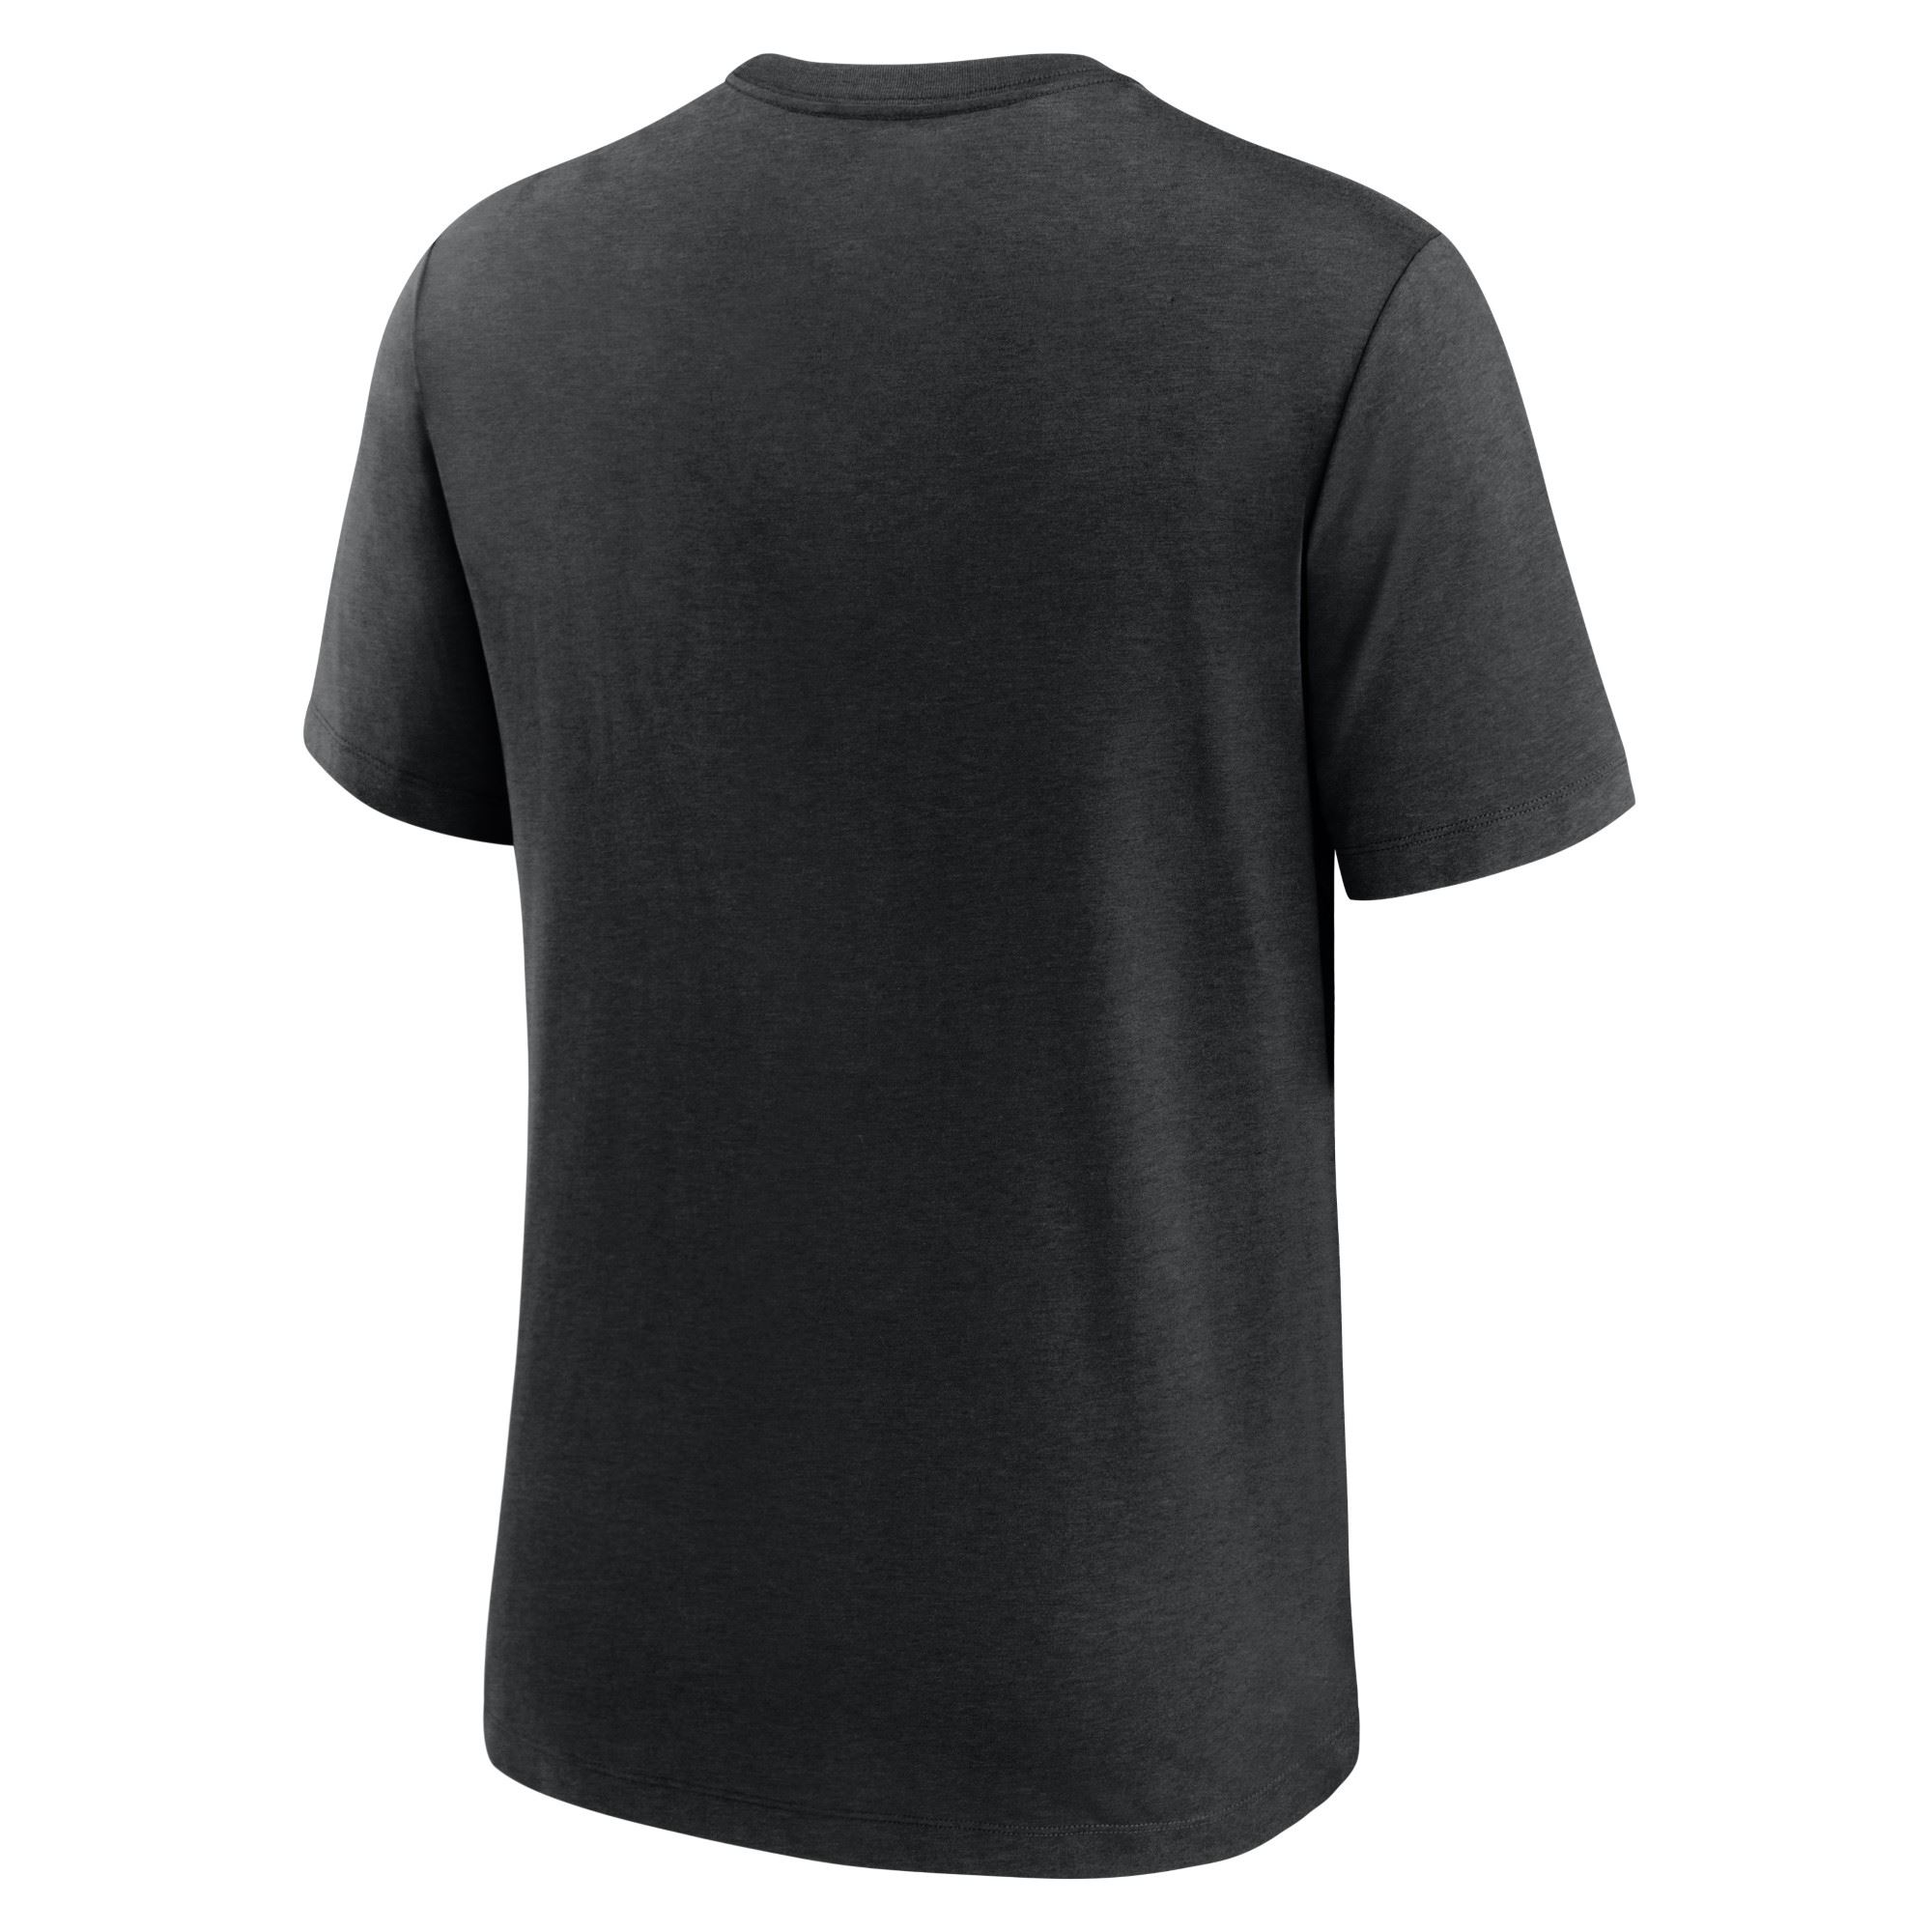 New Orleans Saints NFL Triblend Team Name Black Heather T-Shirt Nike